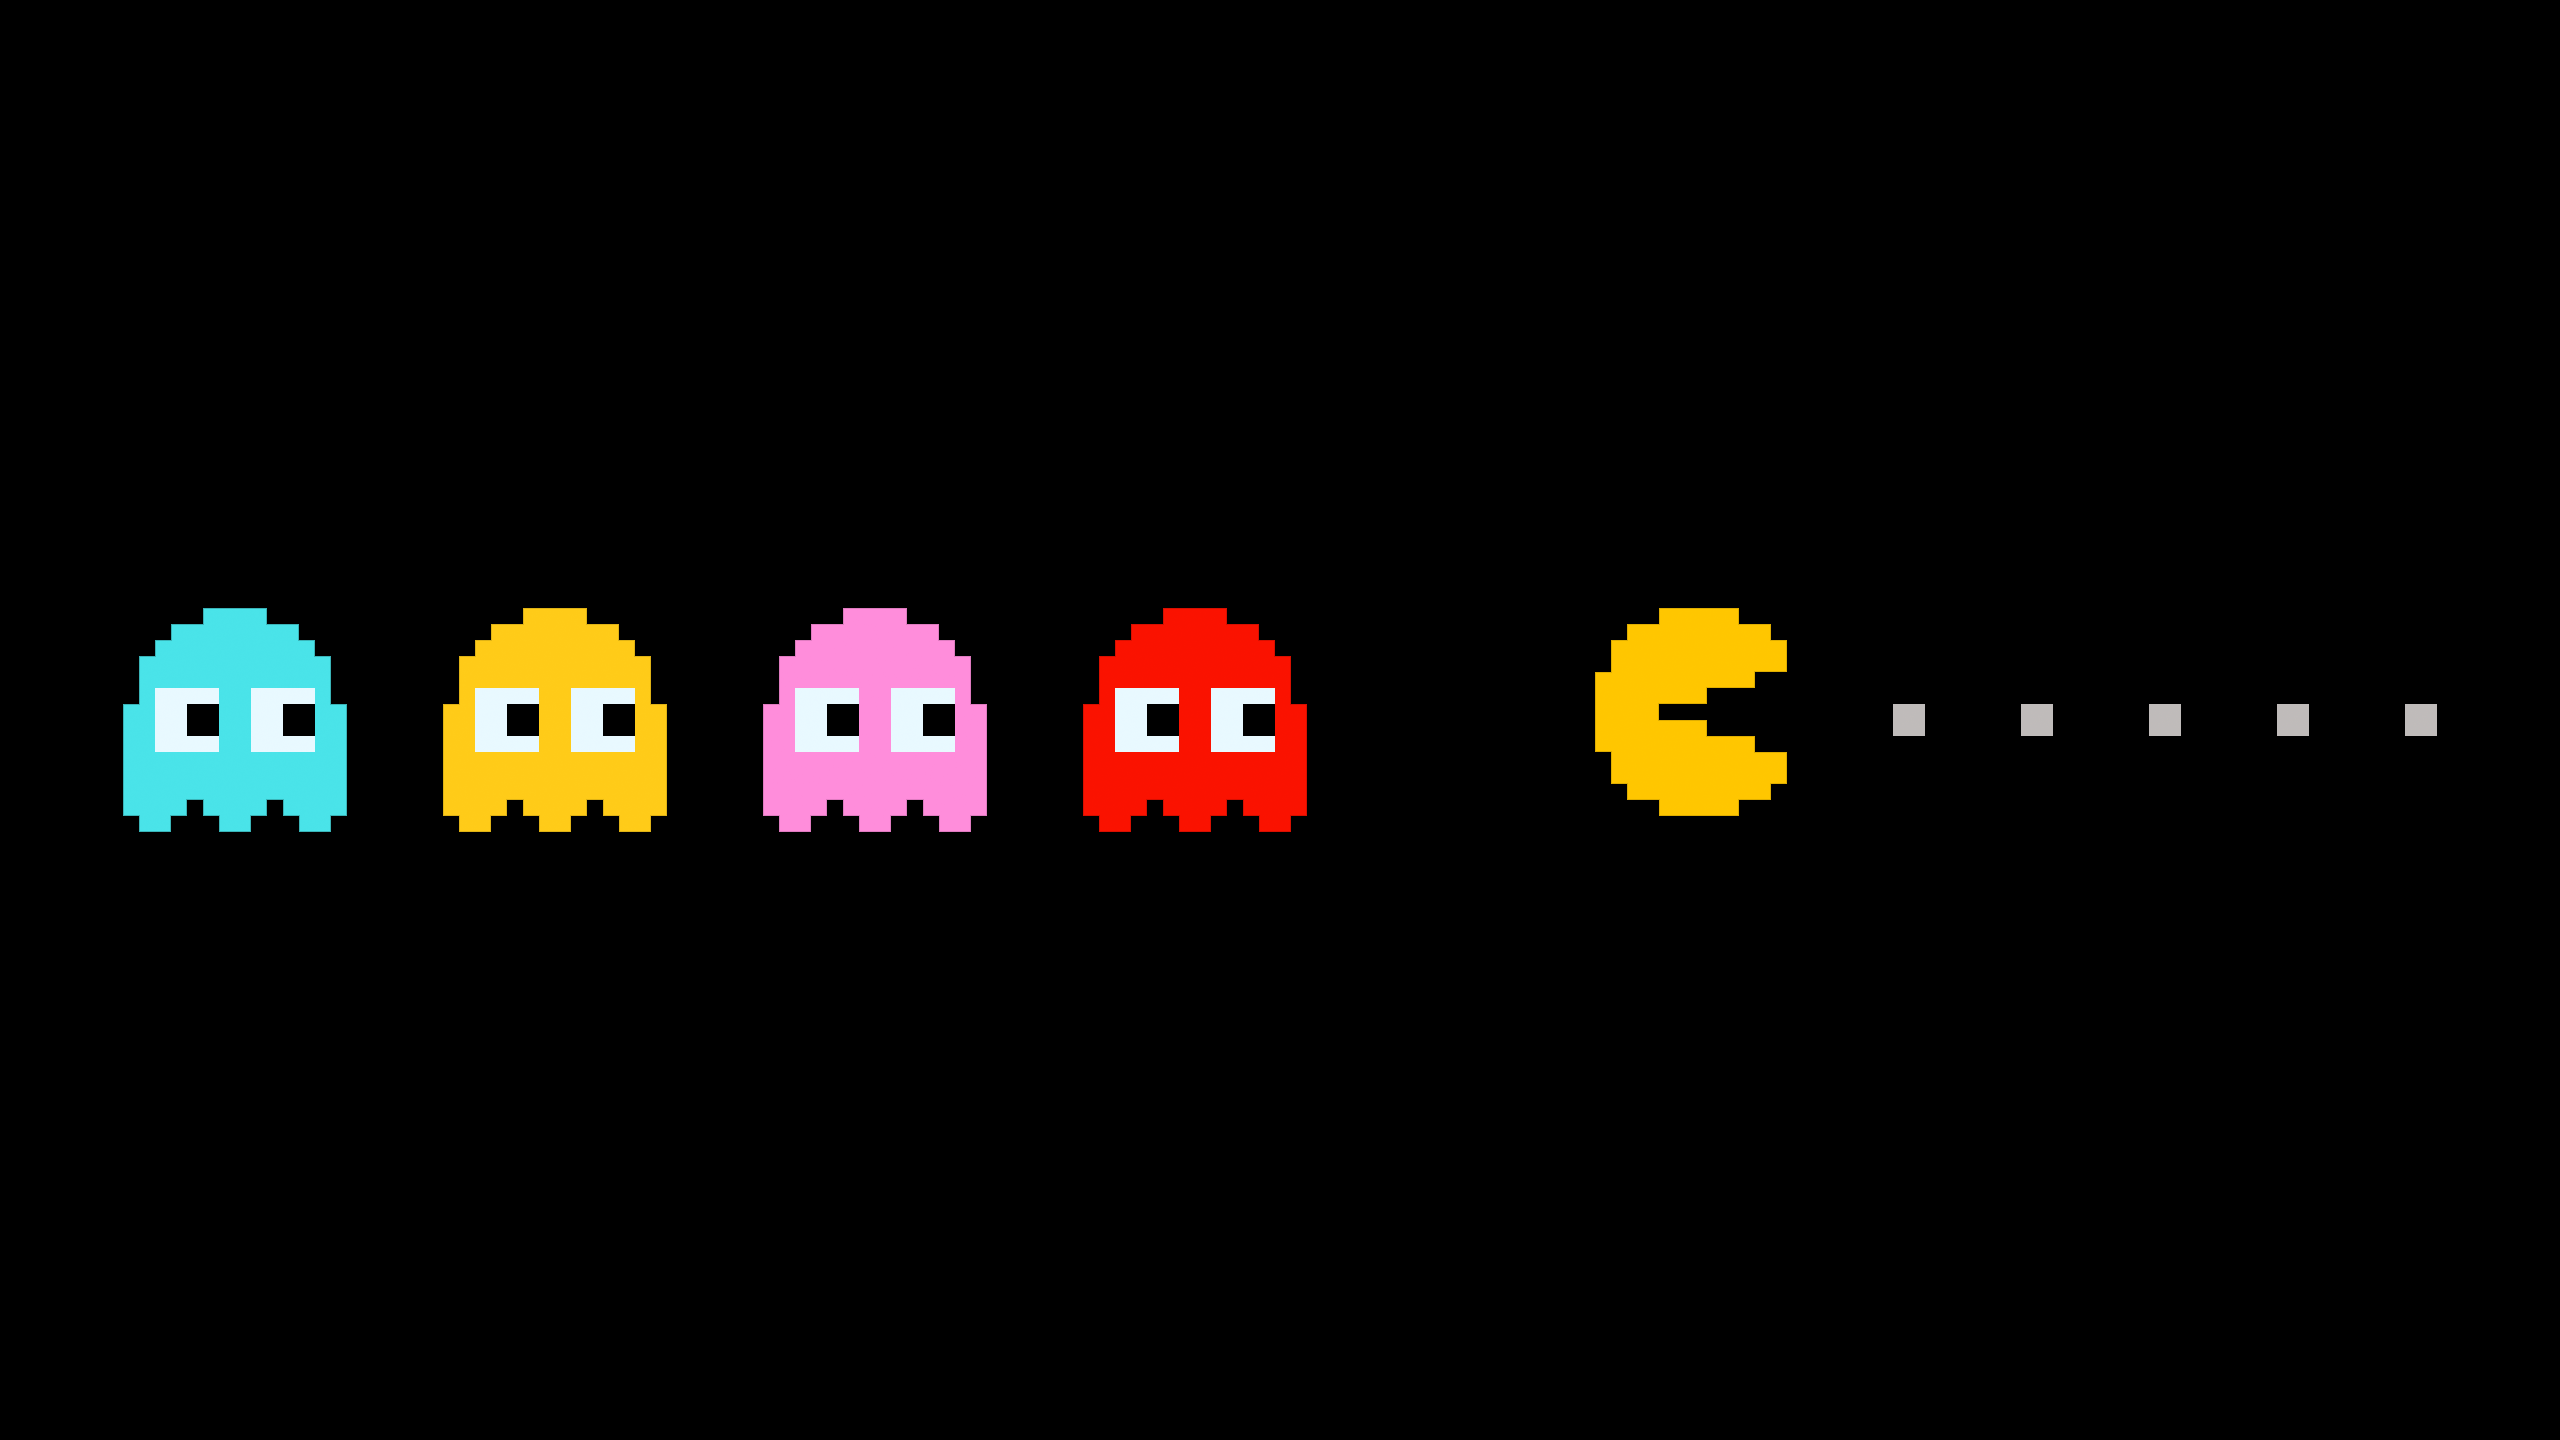 Pacman Wallpaper. Pacman Wallpaper, Ms